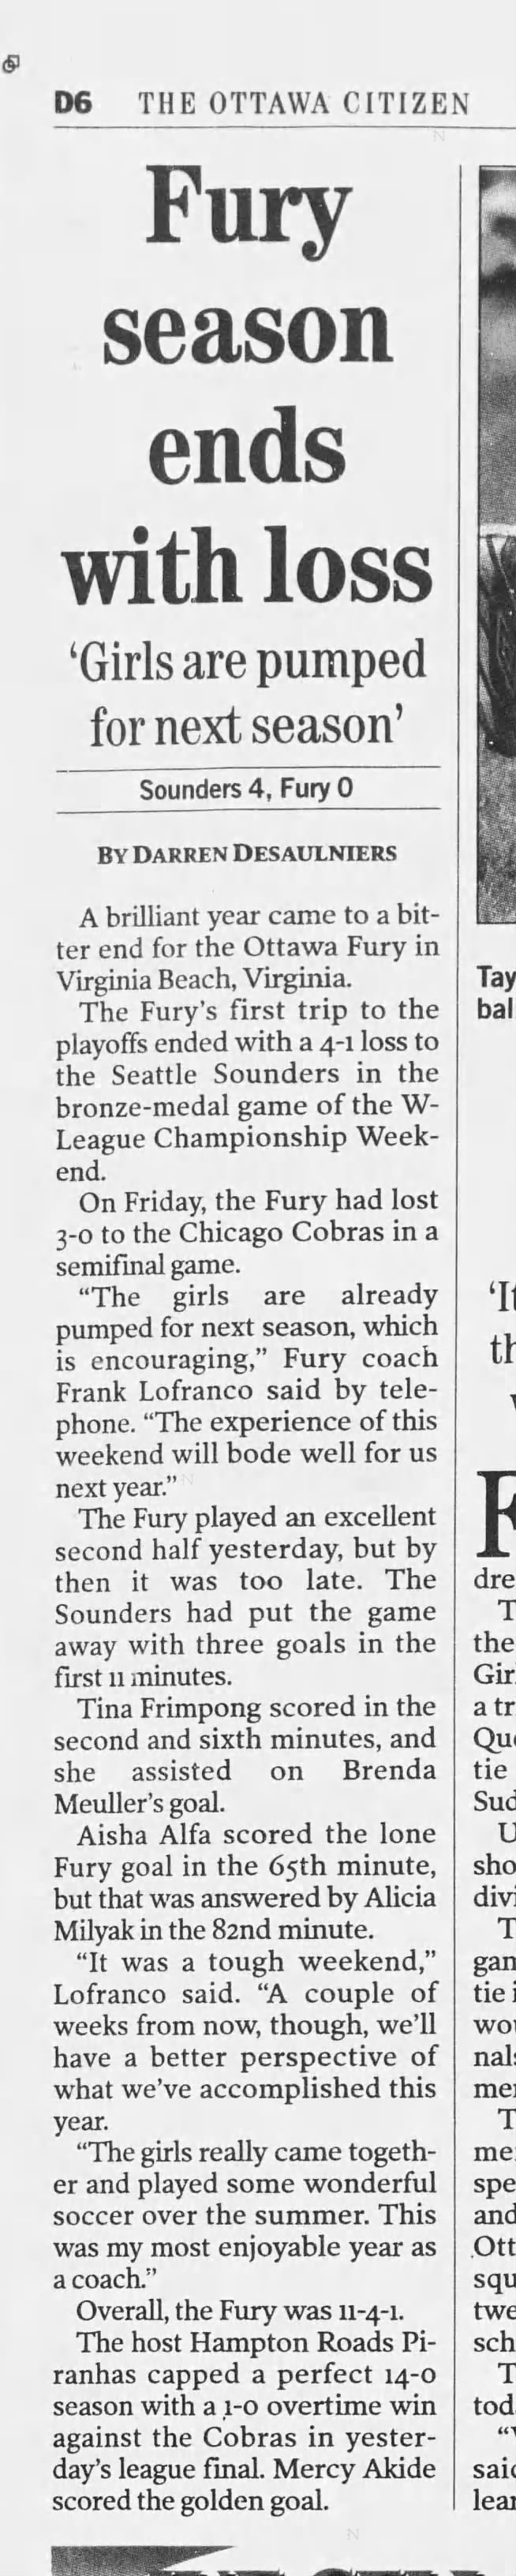 Fury season ends with loss